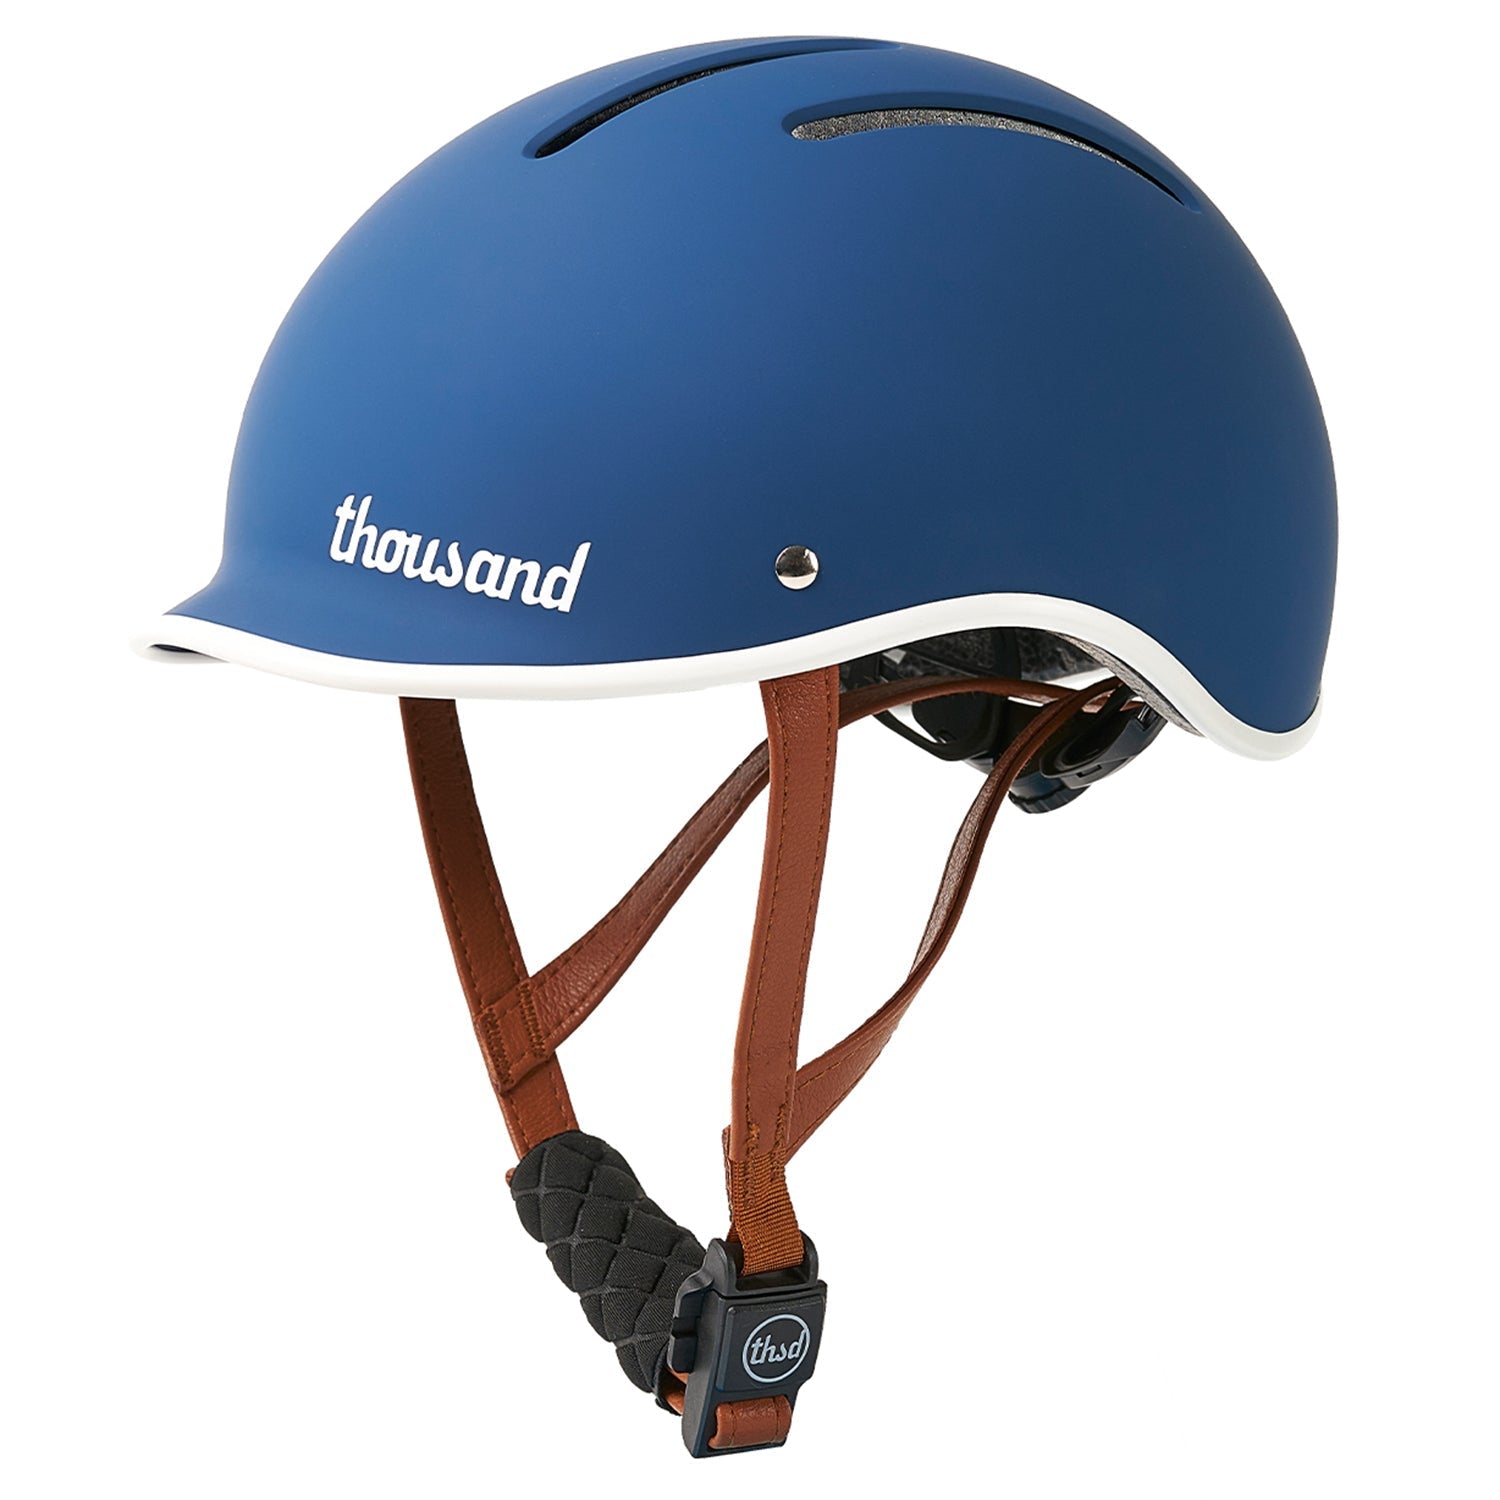 Free Thousand Jr. Helmet - GOTRAX